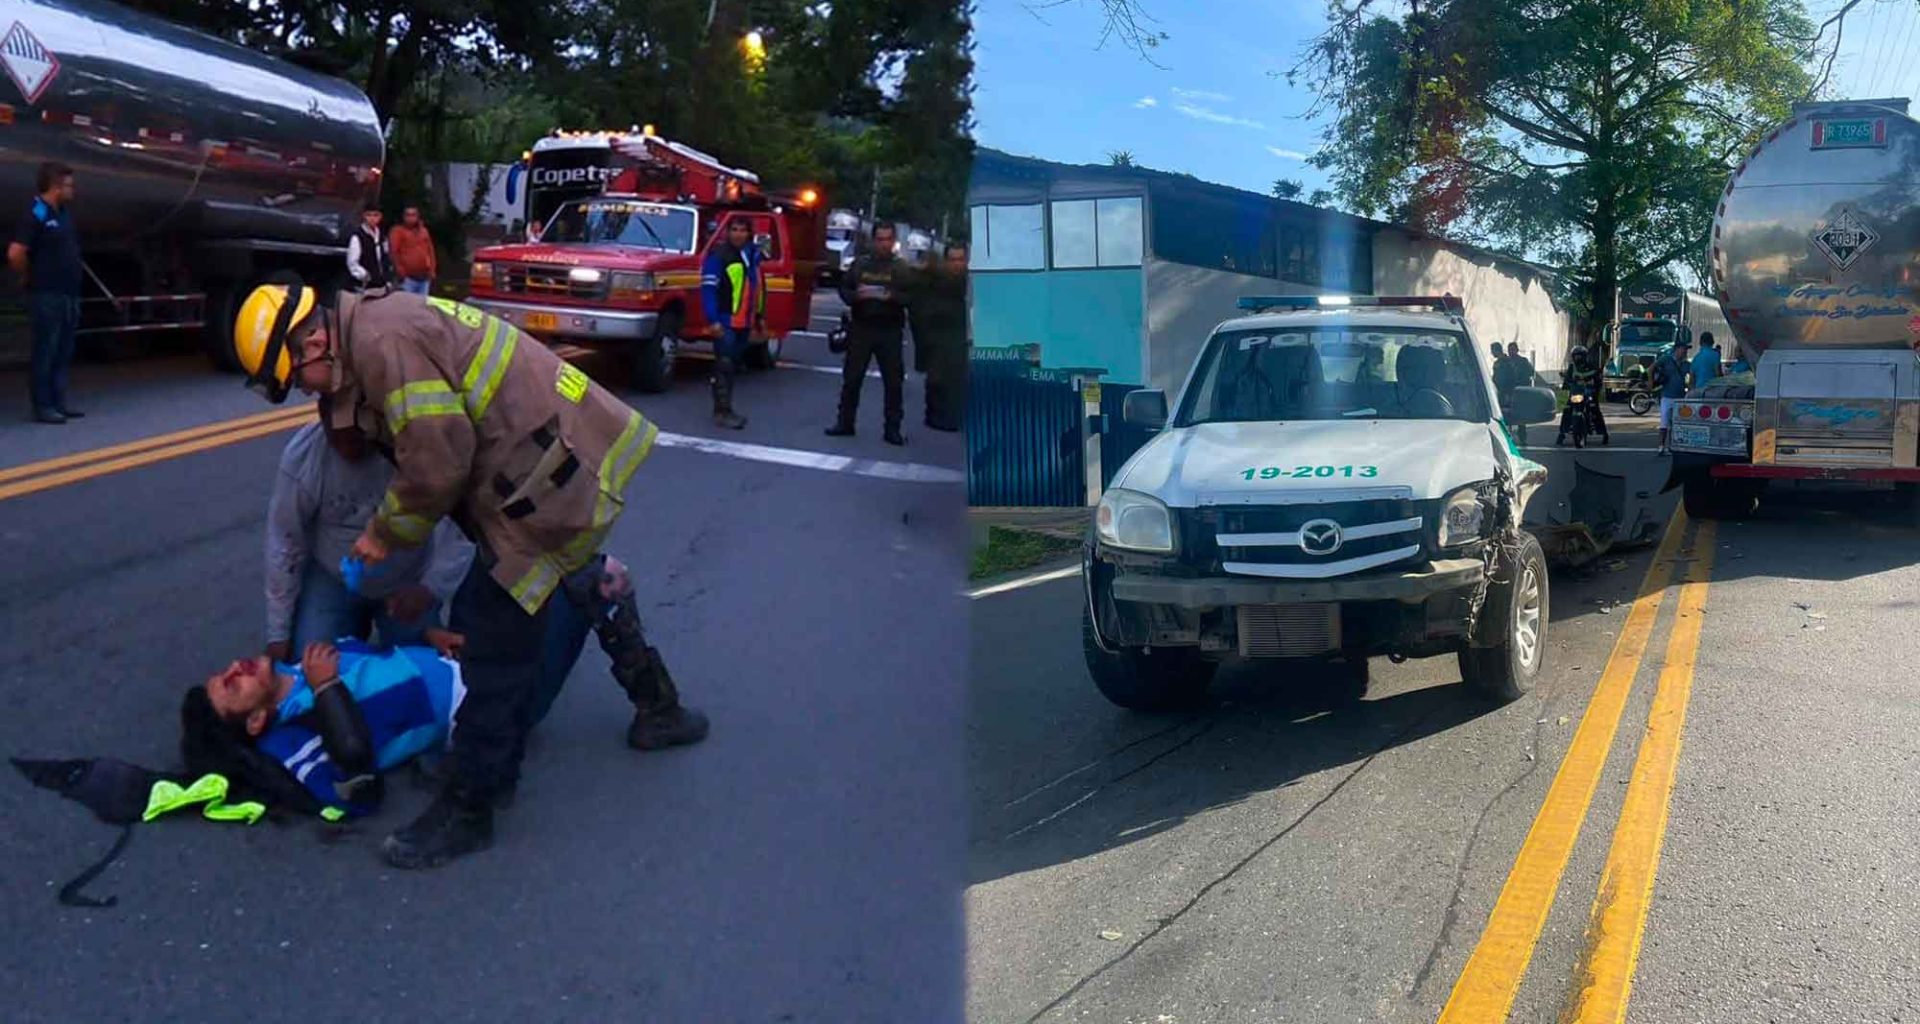 Motociclista herido tras accidente en la vía Sasaima - Villeta